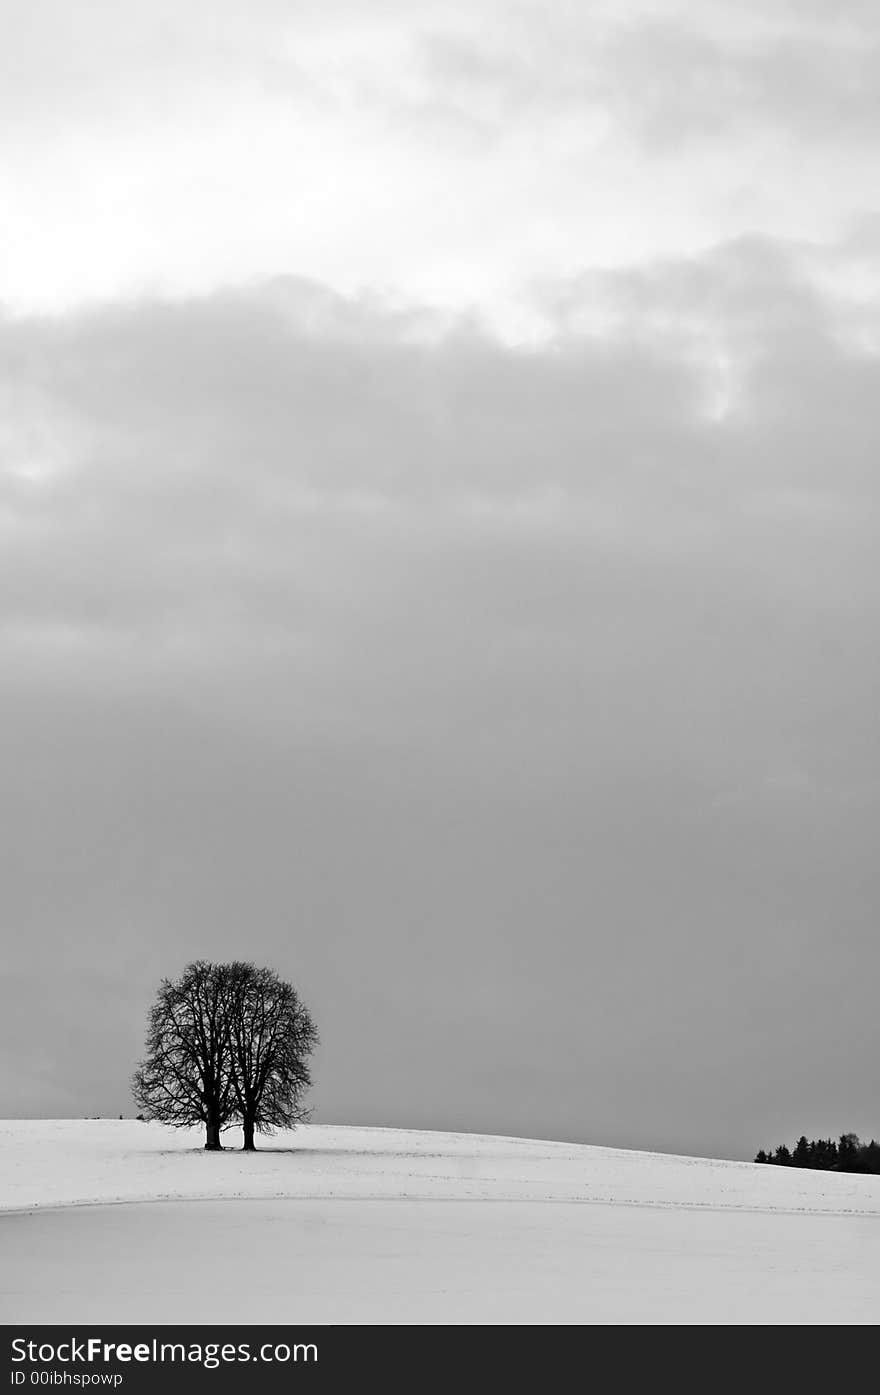 Winter solitude, tree and snow